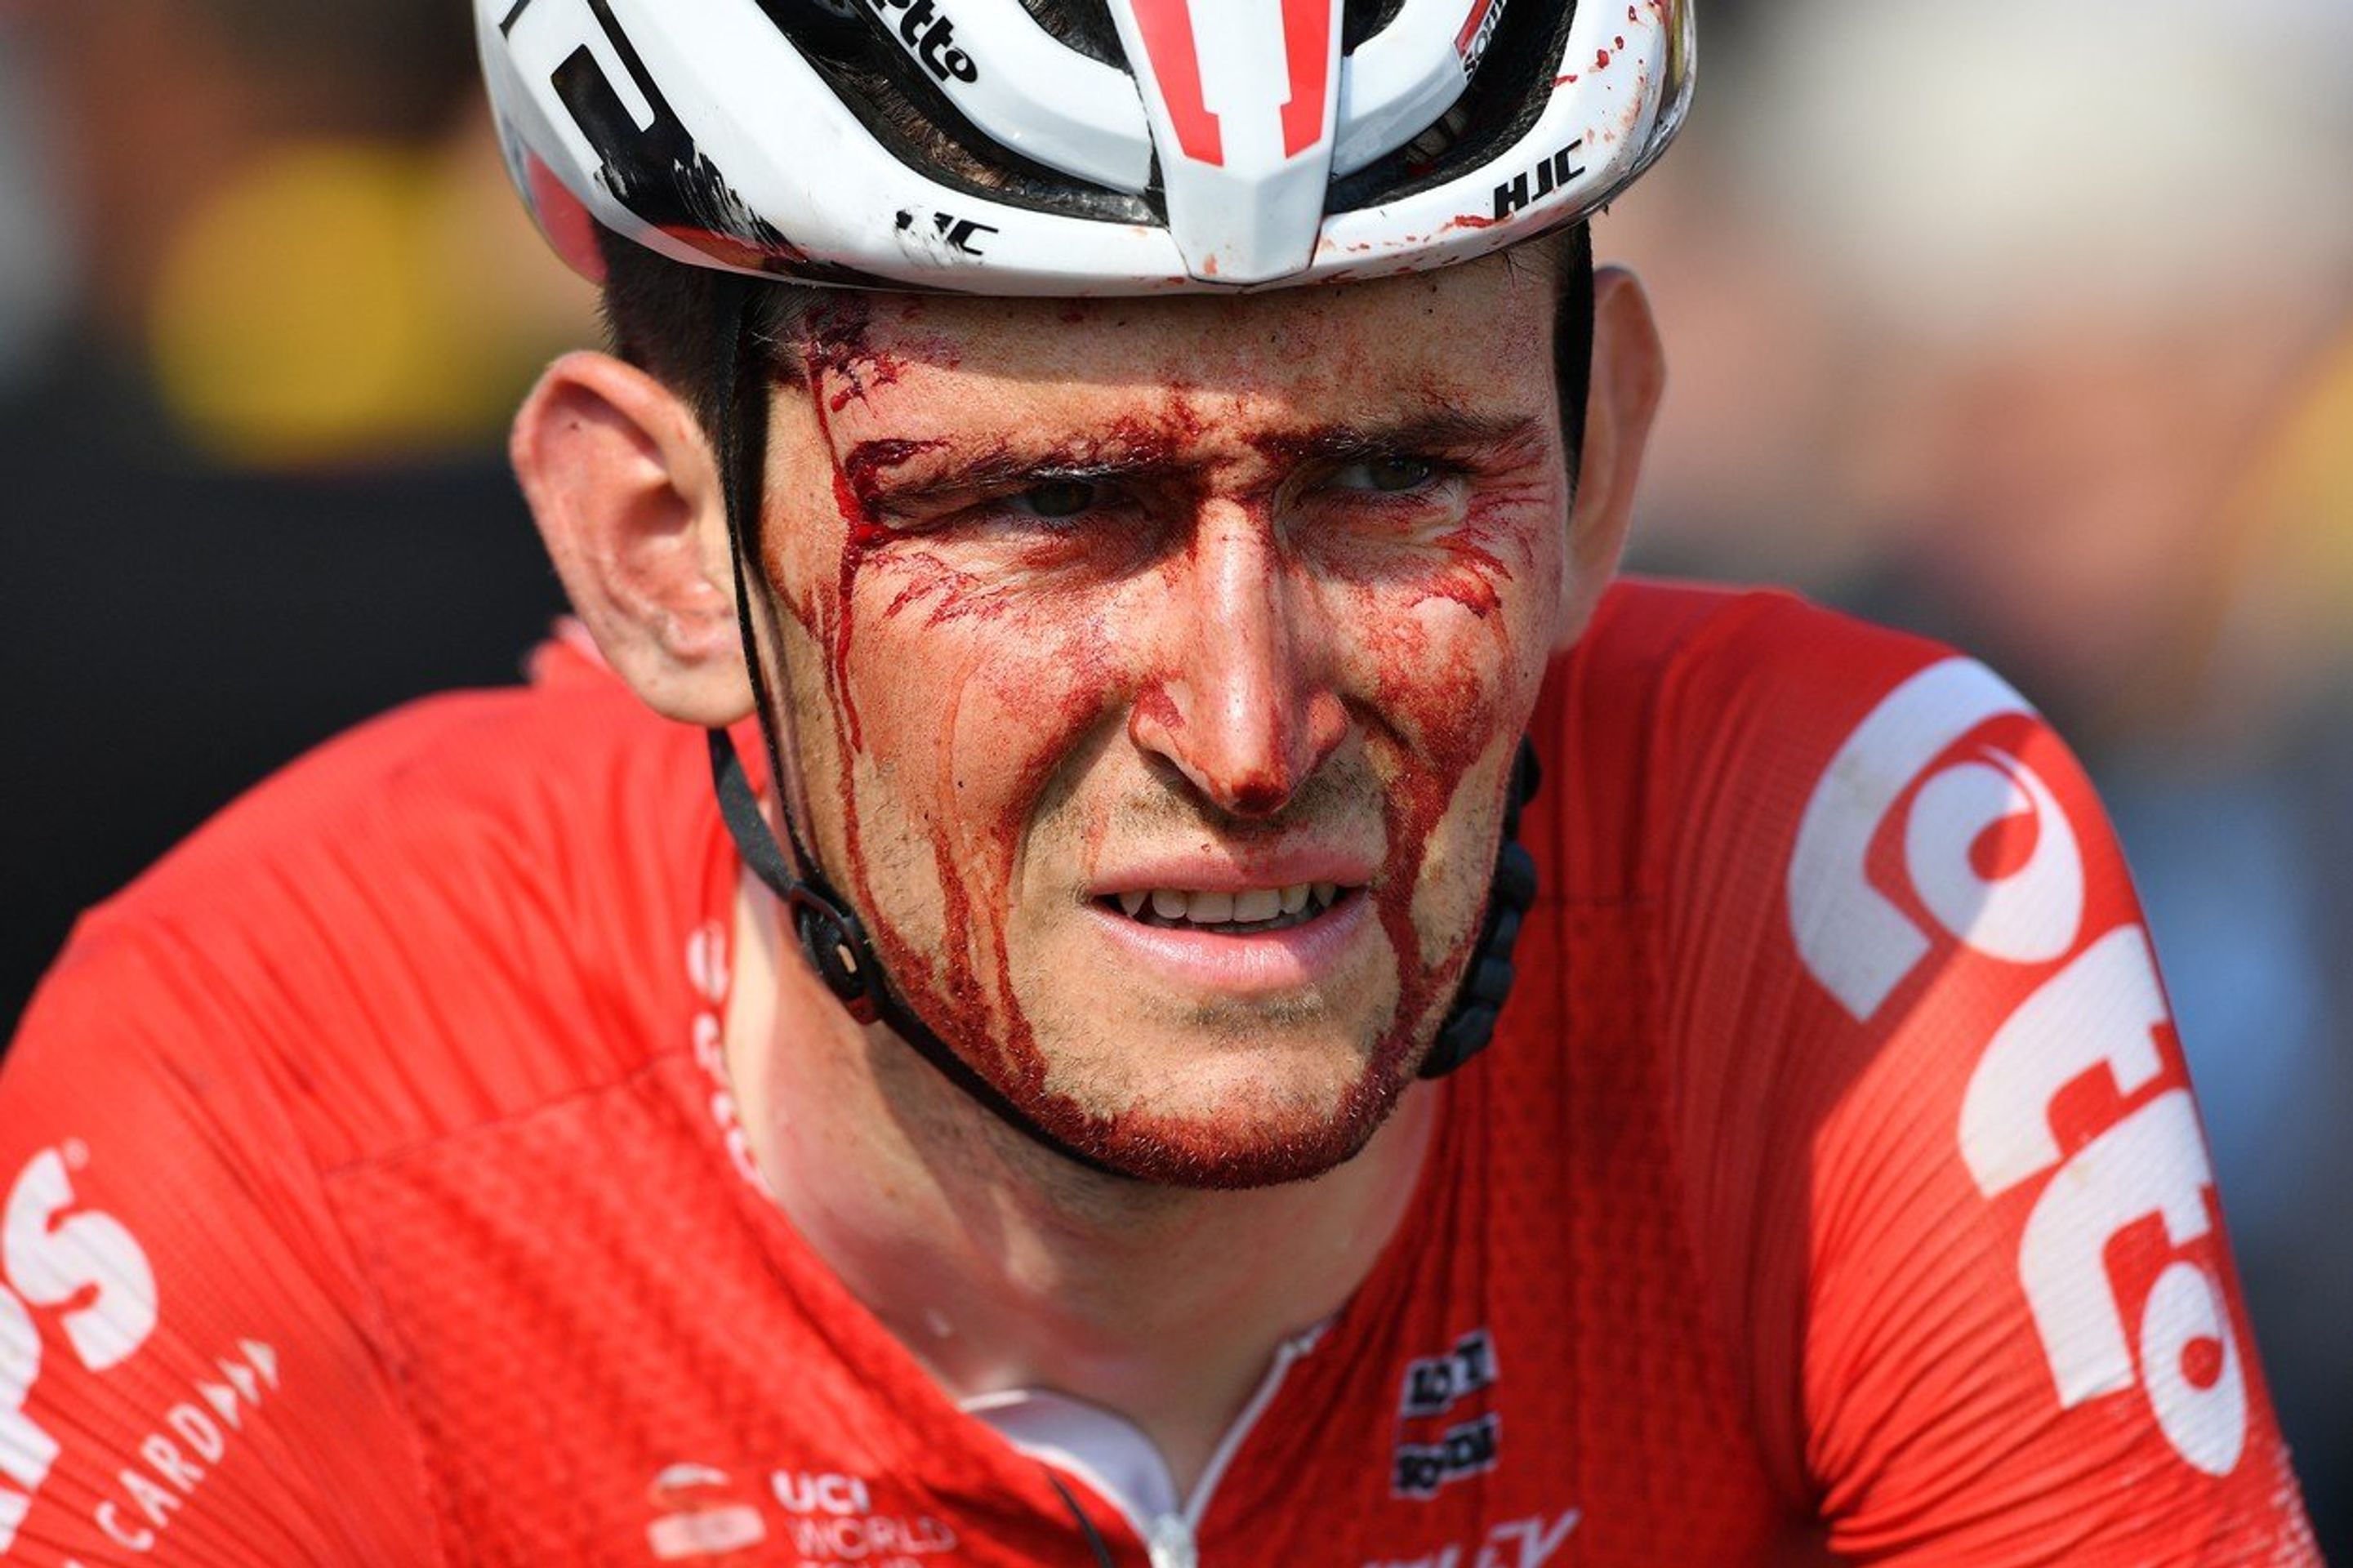 Tiesj Benoot - GALERIE: Belgický cyklista dokončil etapu na Tour celý od krve (4/4)